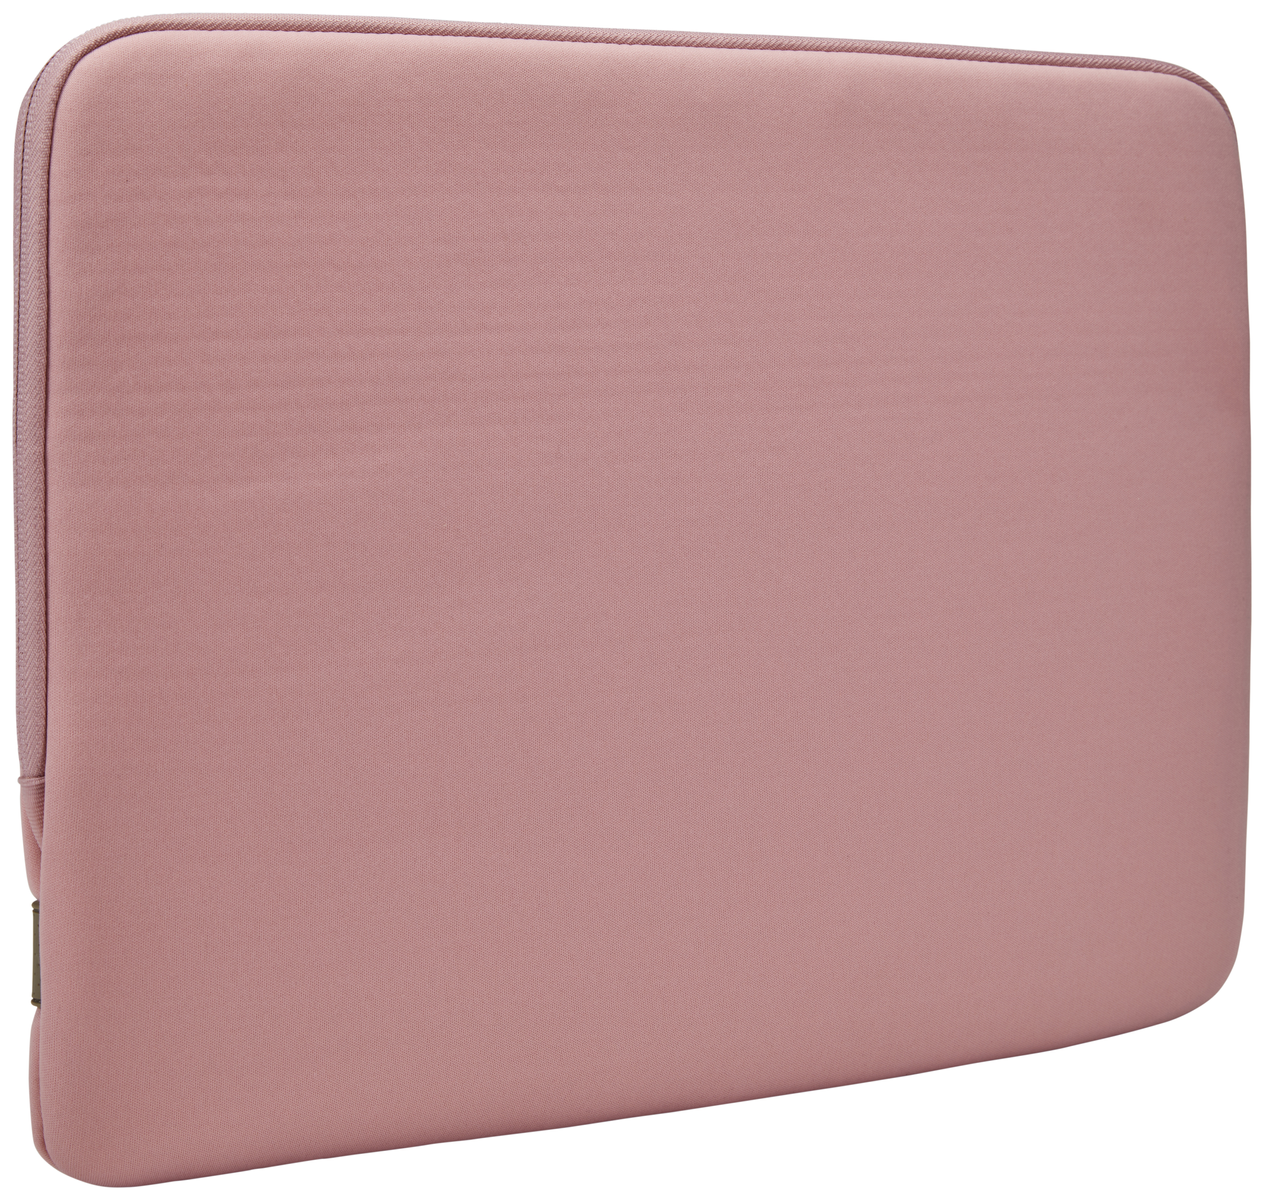 Polyester, CASE Reflect LOGIC Zephyr Sleeve Sleeve für Universal Pink/Mermaid Notebook